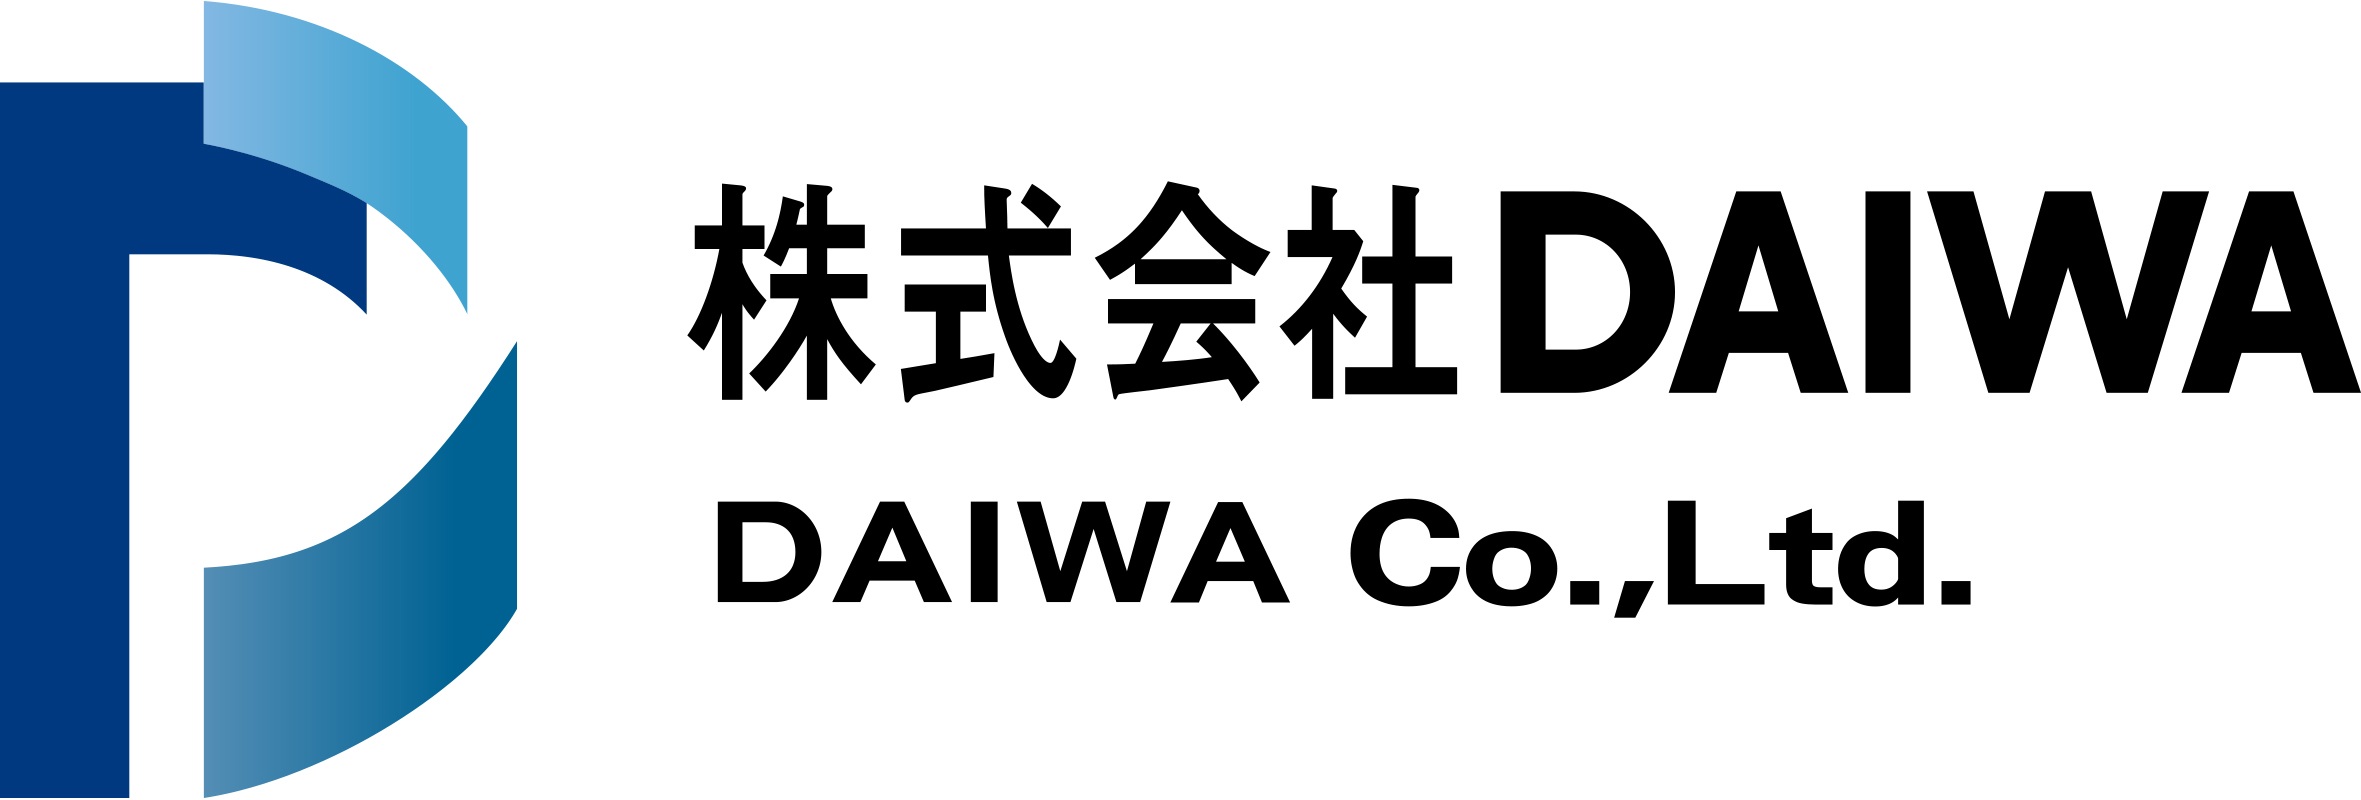 株式会社DAIWA